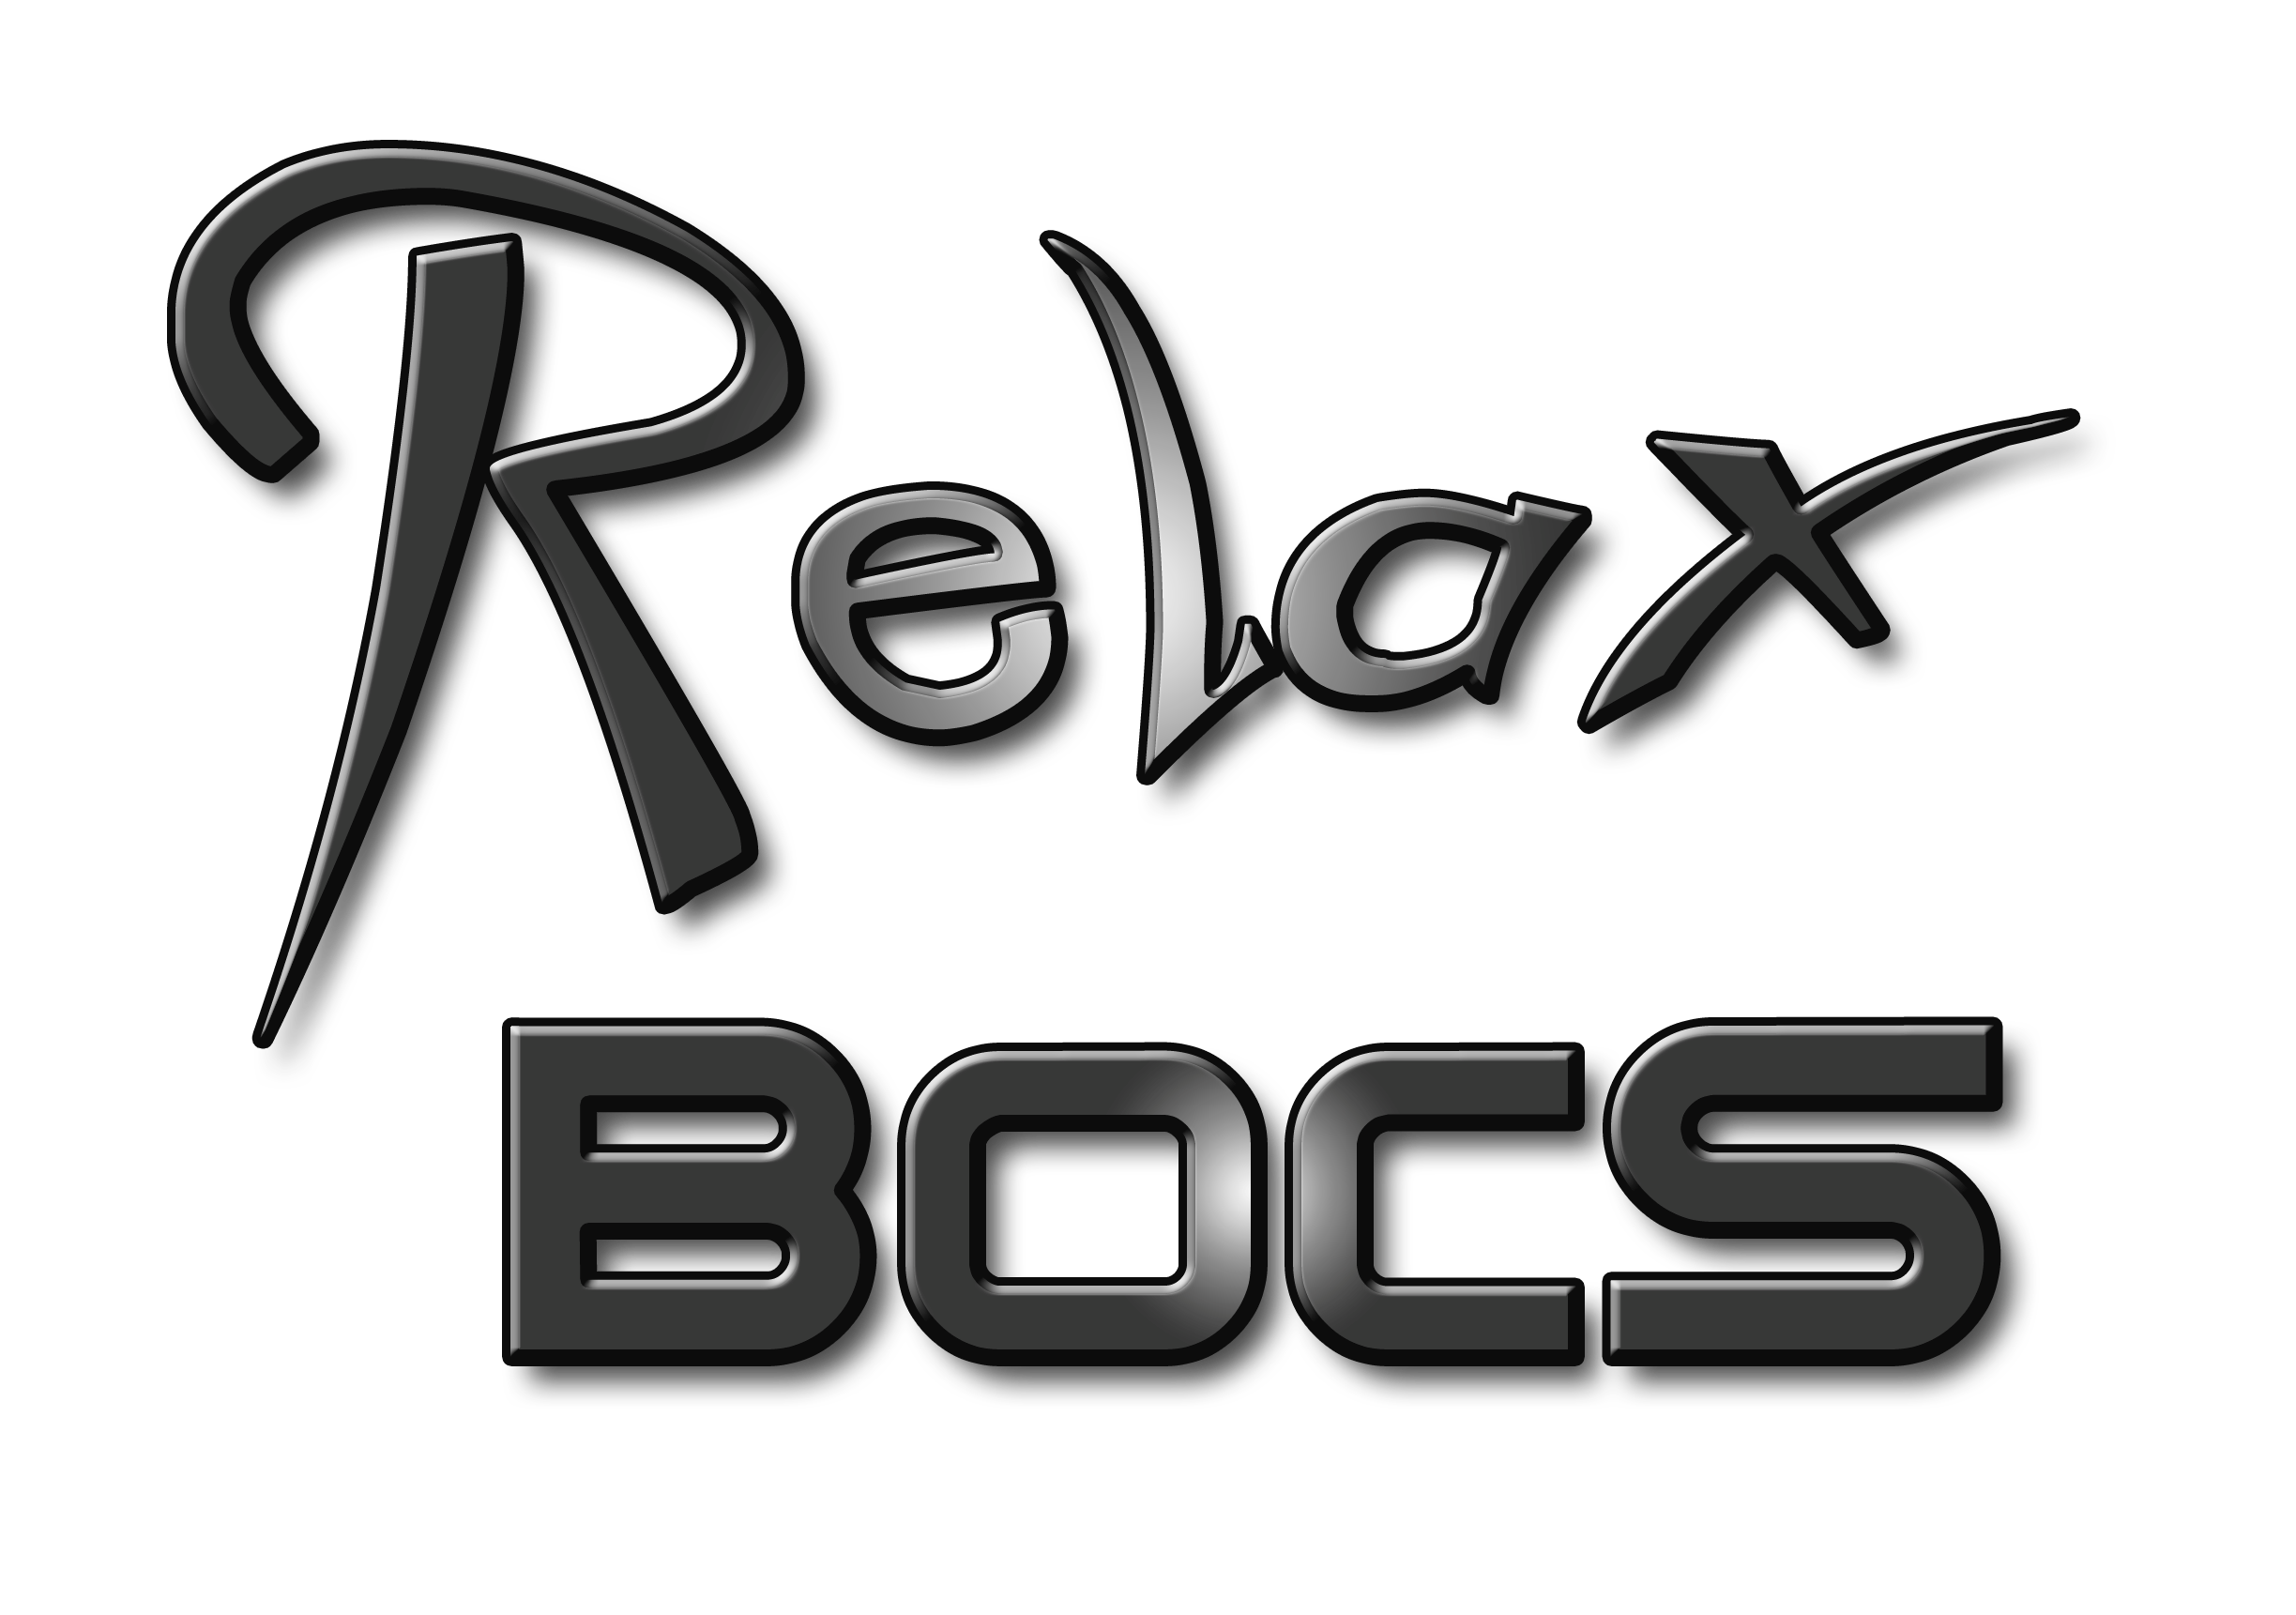 relax-bocs-logo-dunkel-_quadrat-kopie.png